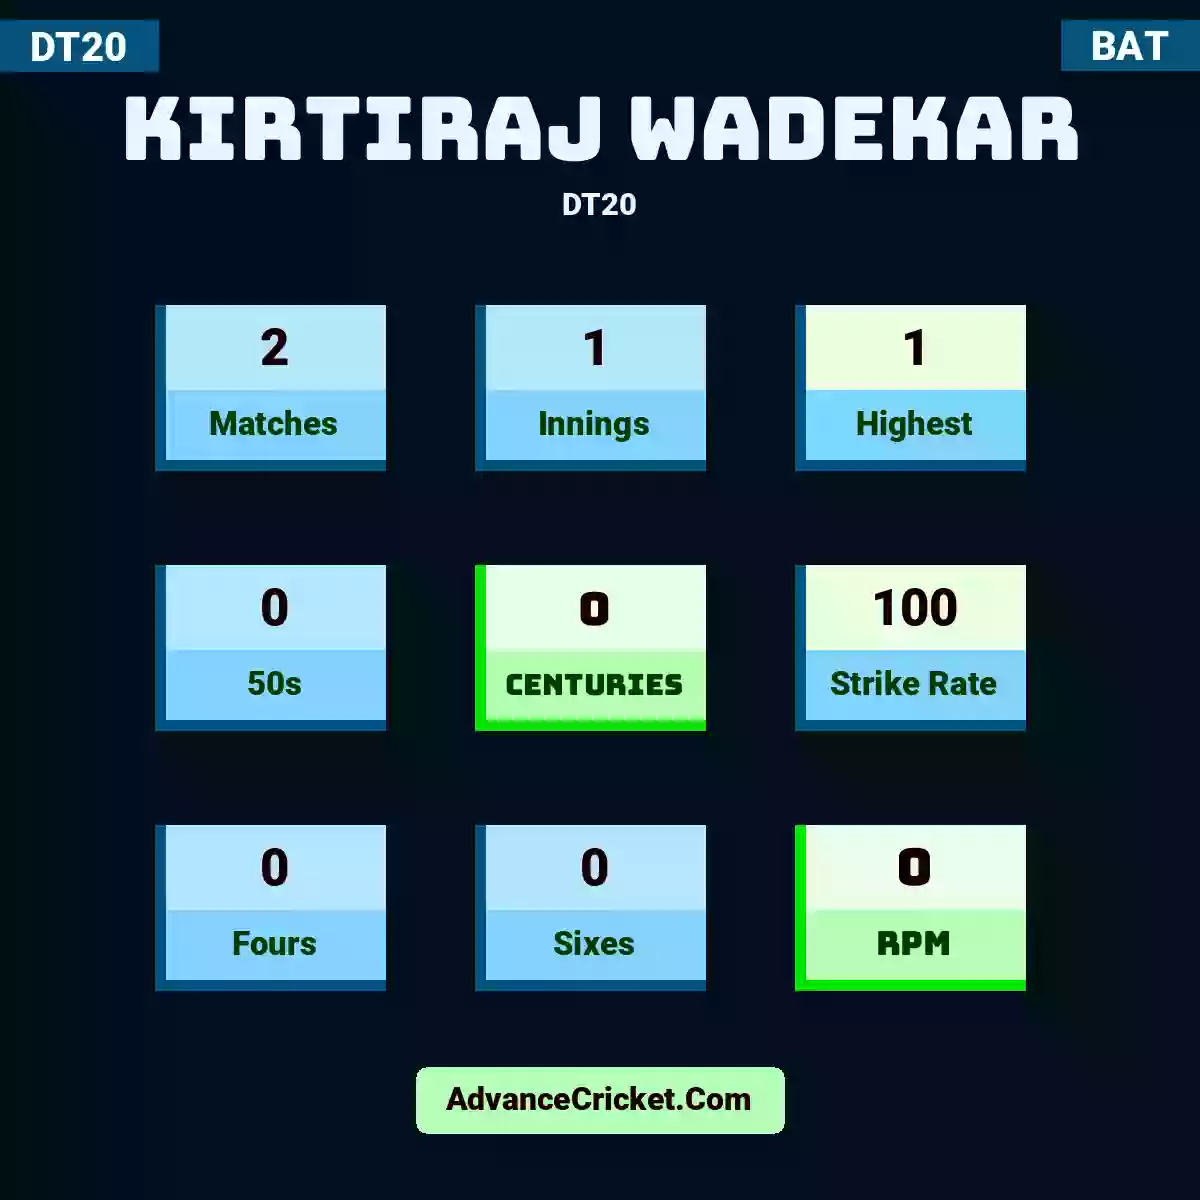 Kirtiraj Wadekar DT20 , Kirtiraj Wadekar played 2 matches, scored 1 runs as highest, 0 half-centuries, and 0 centuries, with a strike rate of 100. K.Wadekar hit 0 fours and 0 sixes, with an RPM of 0.